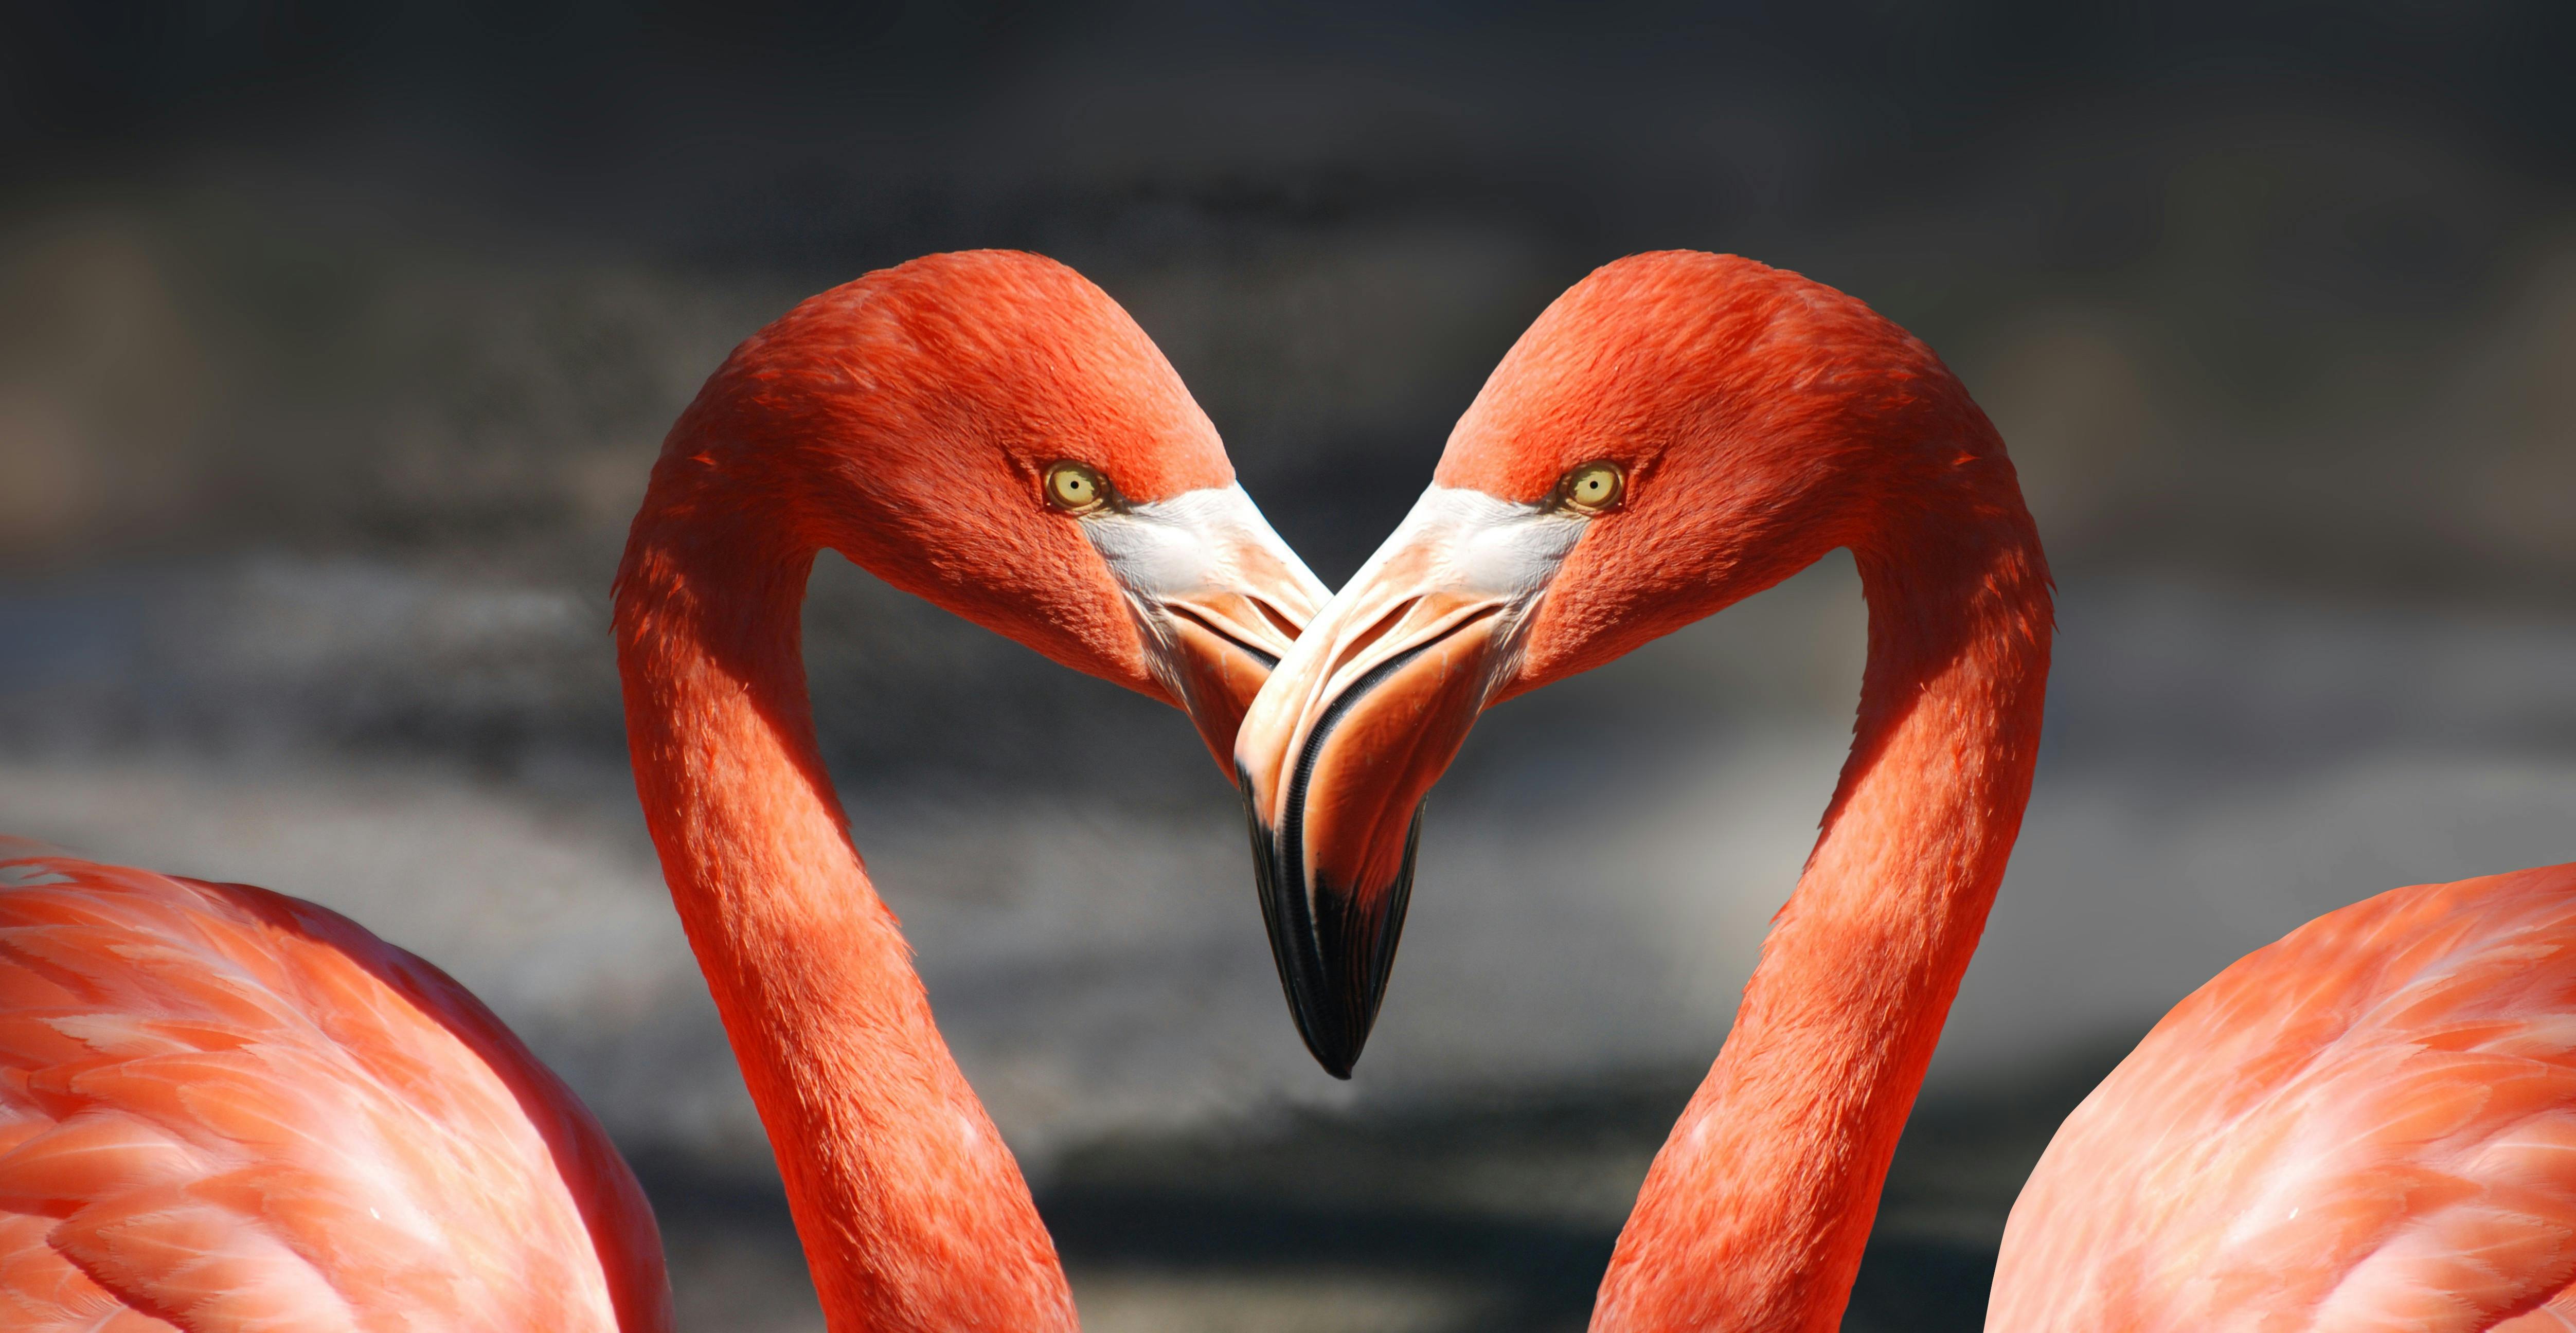 Flamingo Bird Exotic iPhone Wallpaper  iDrop News